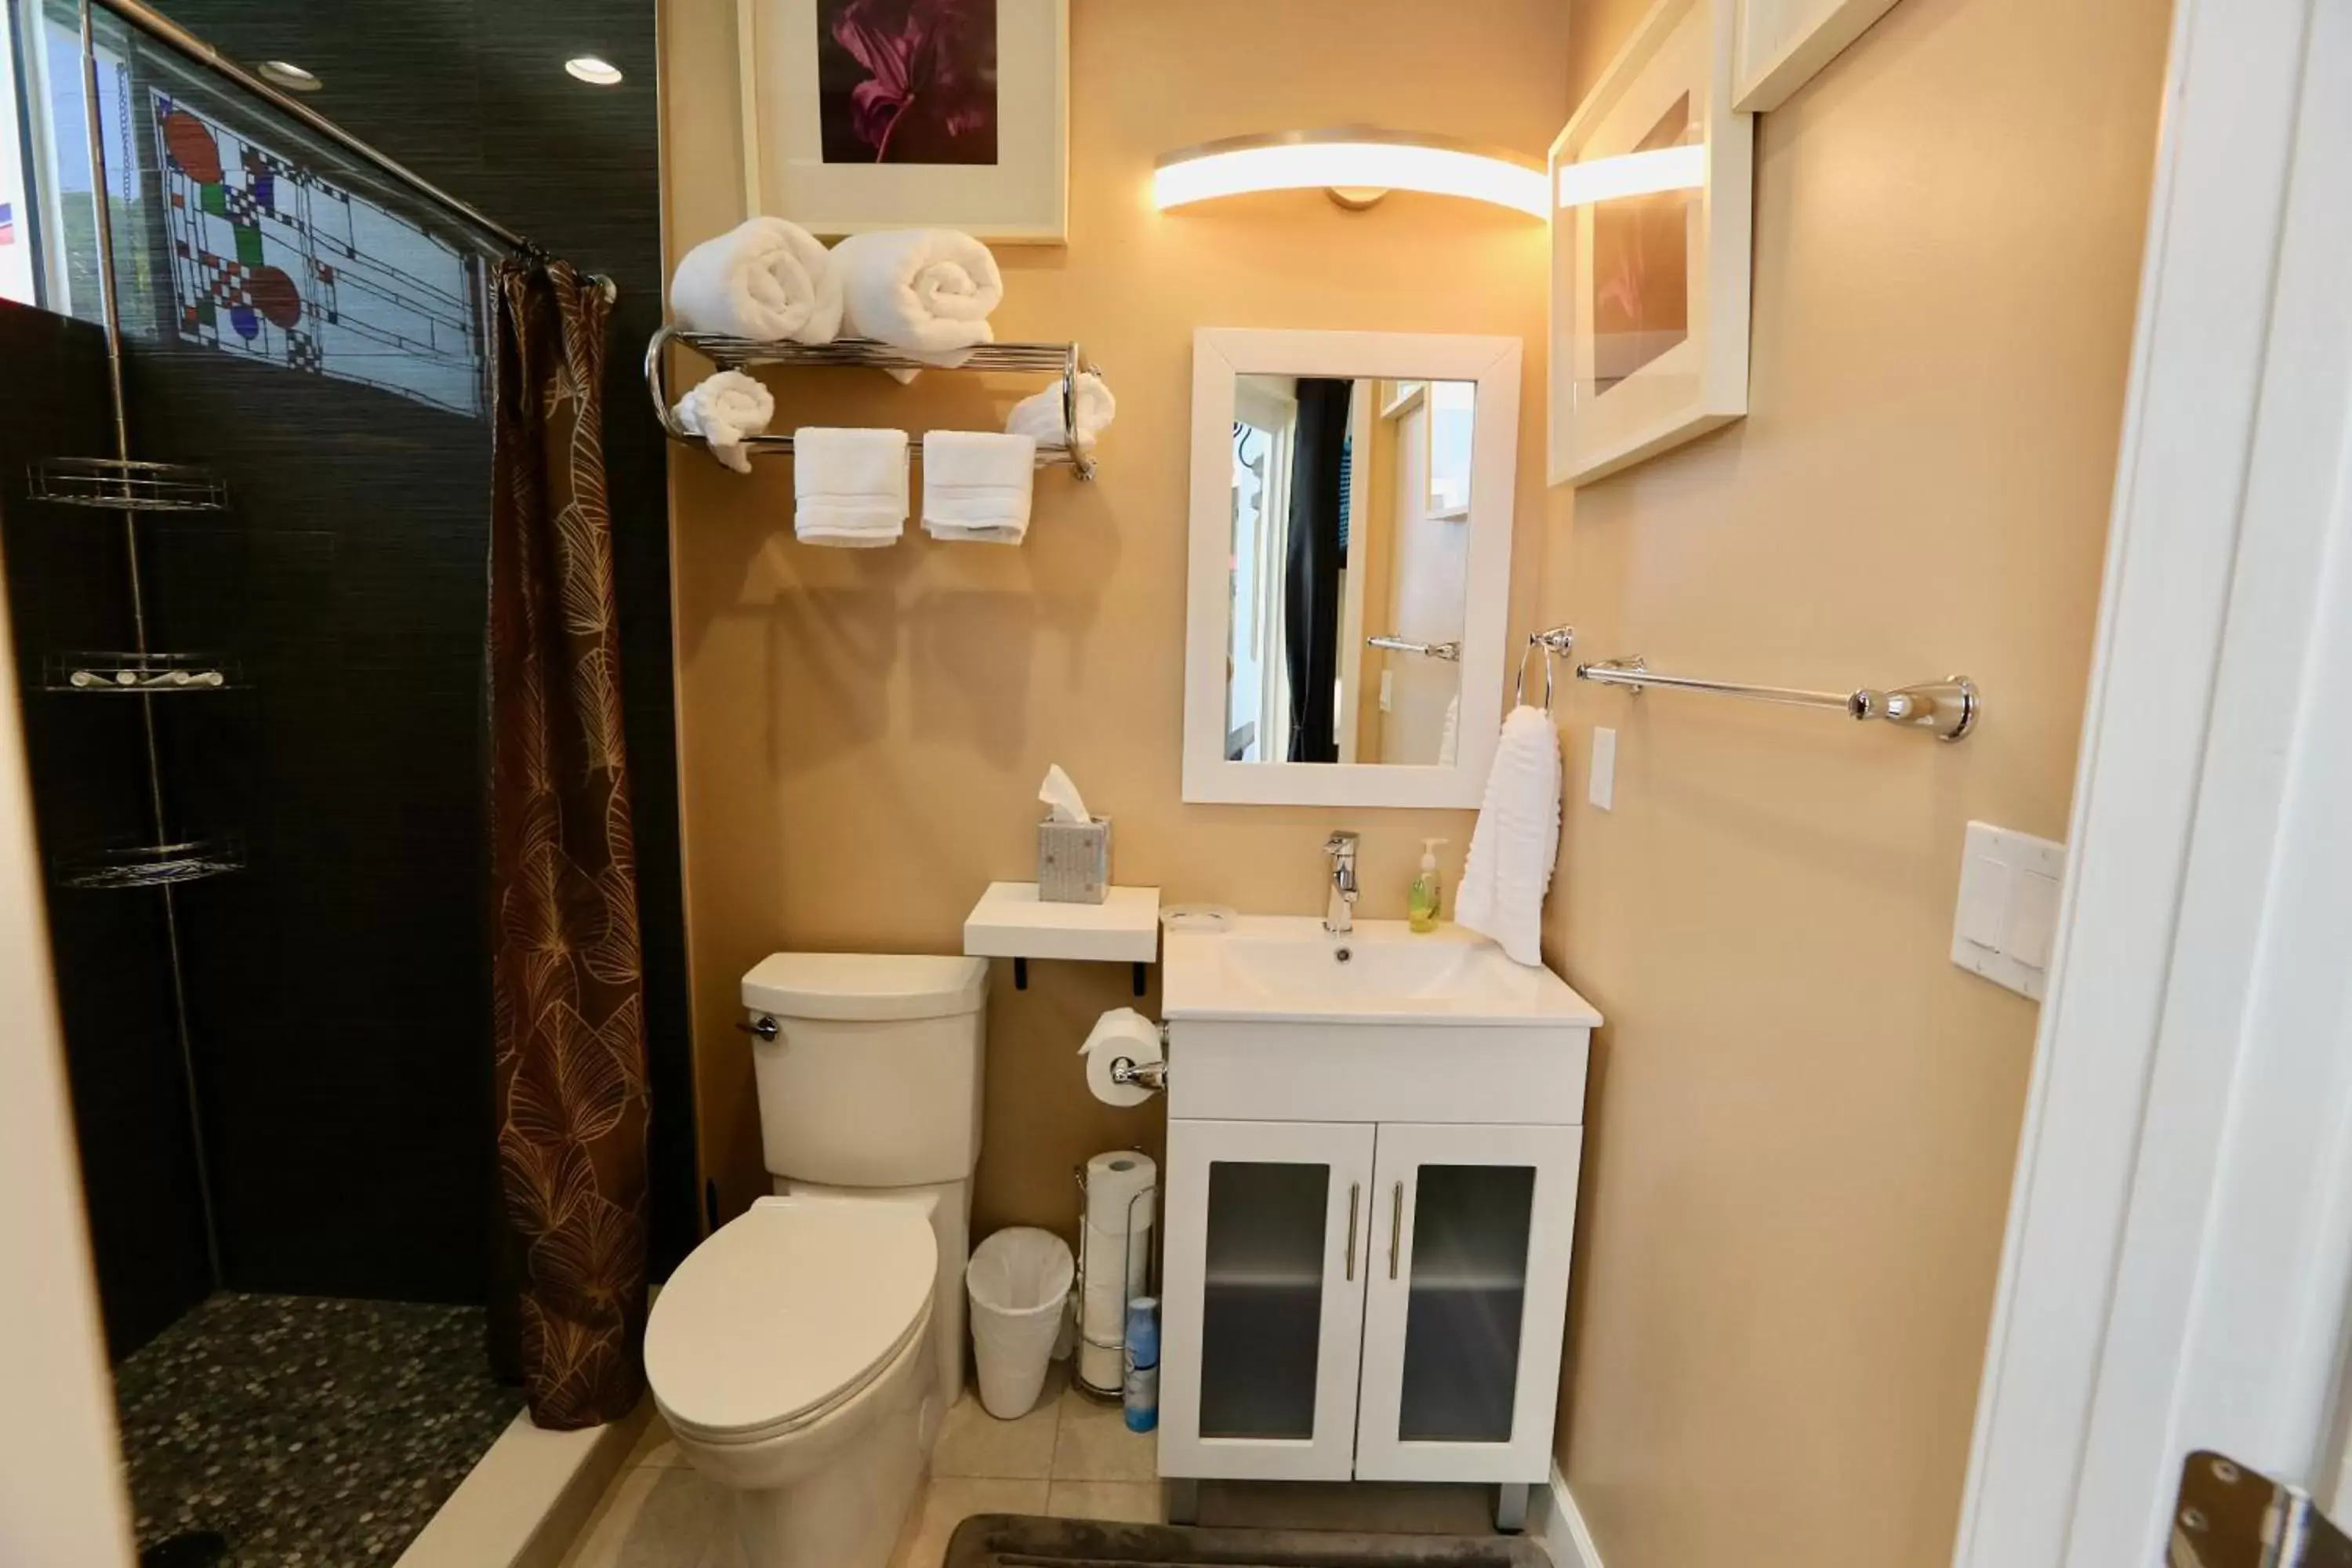 Bathroom in Fantasy Island Inn, Caters to Men